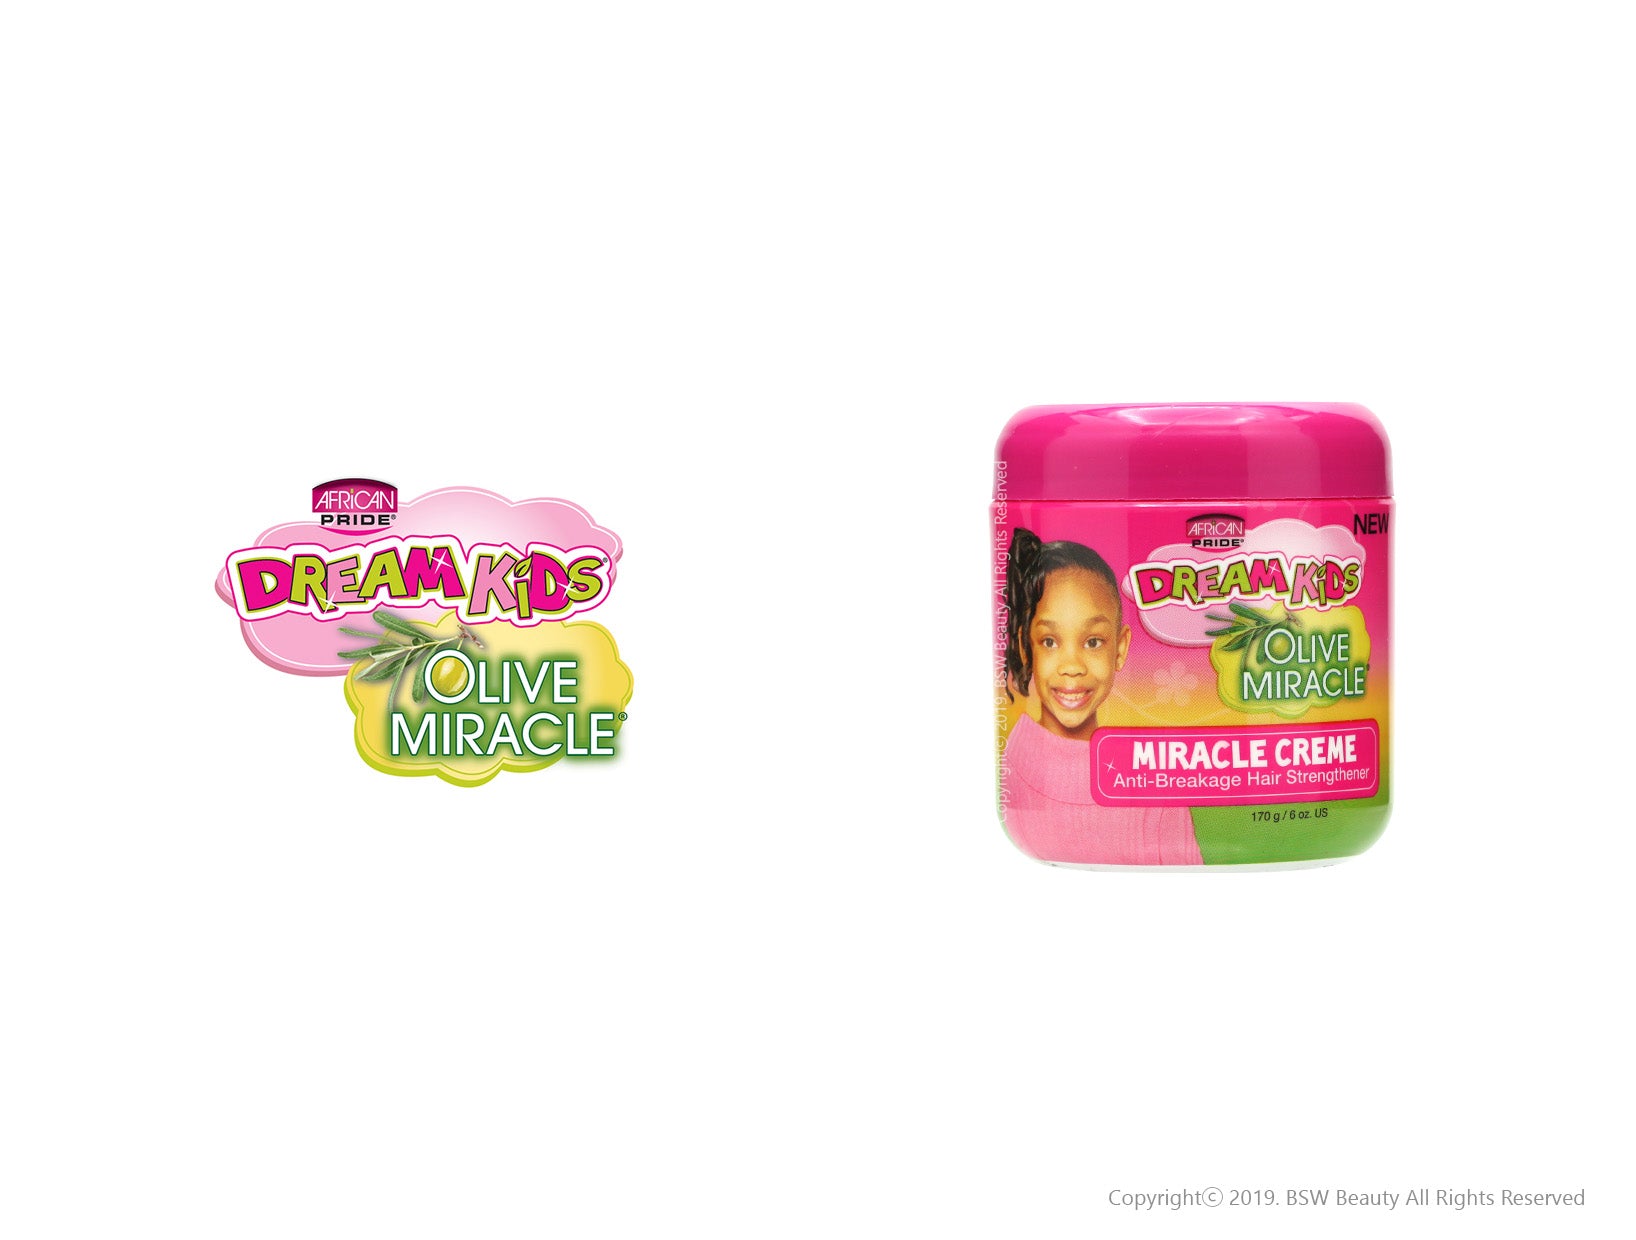 Mielle Organics: Mongongo Oil Thermal & Heat Protectant Spray 4oz – Beauty  Depot O-Store